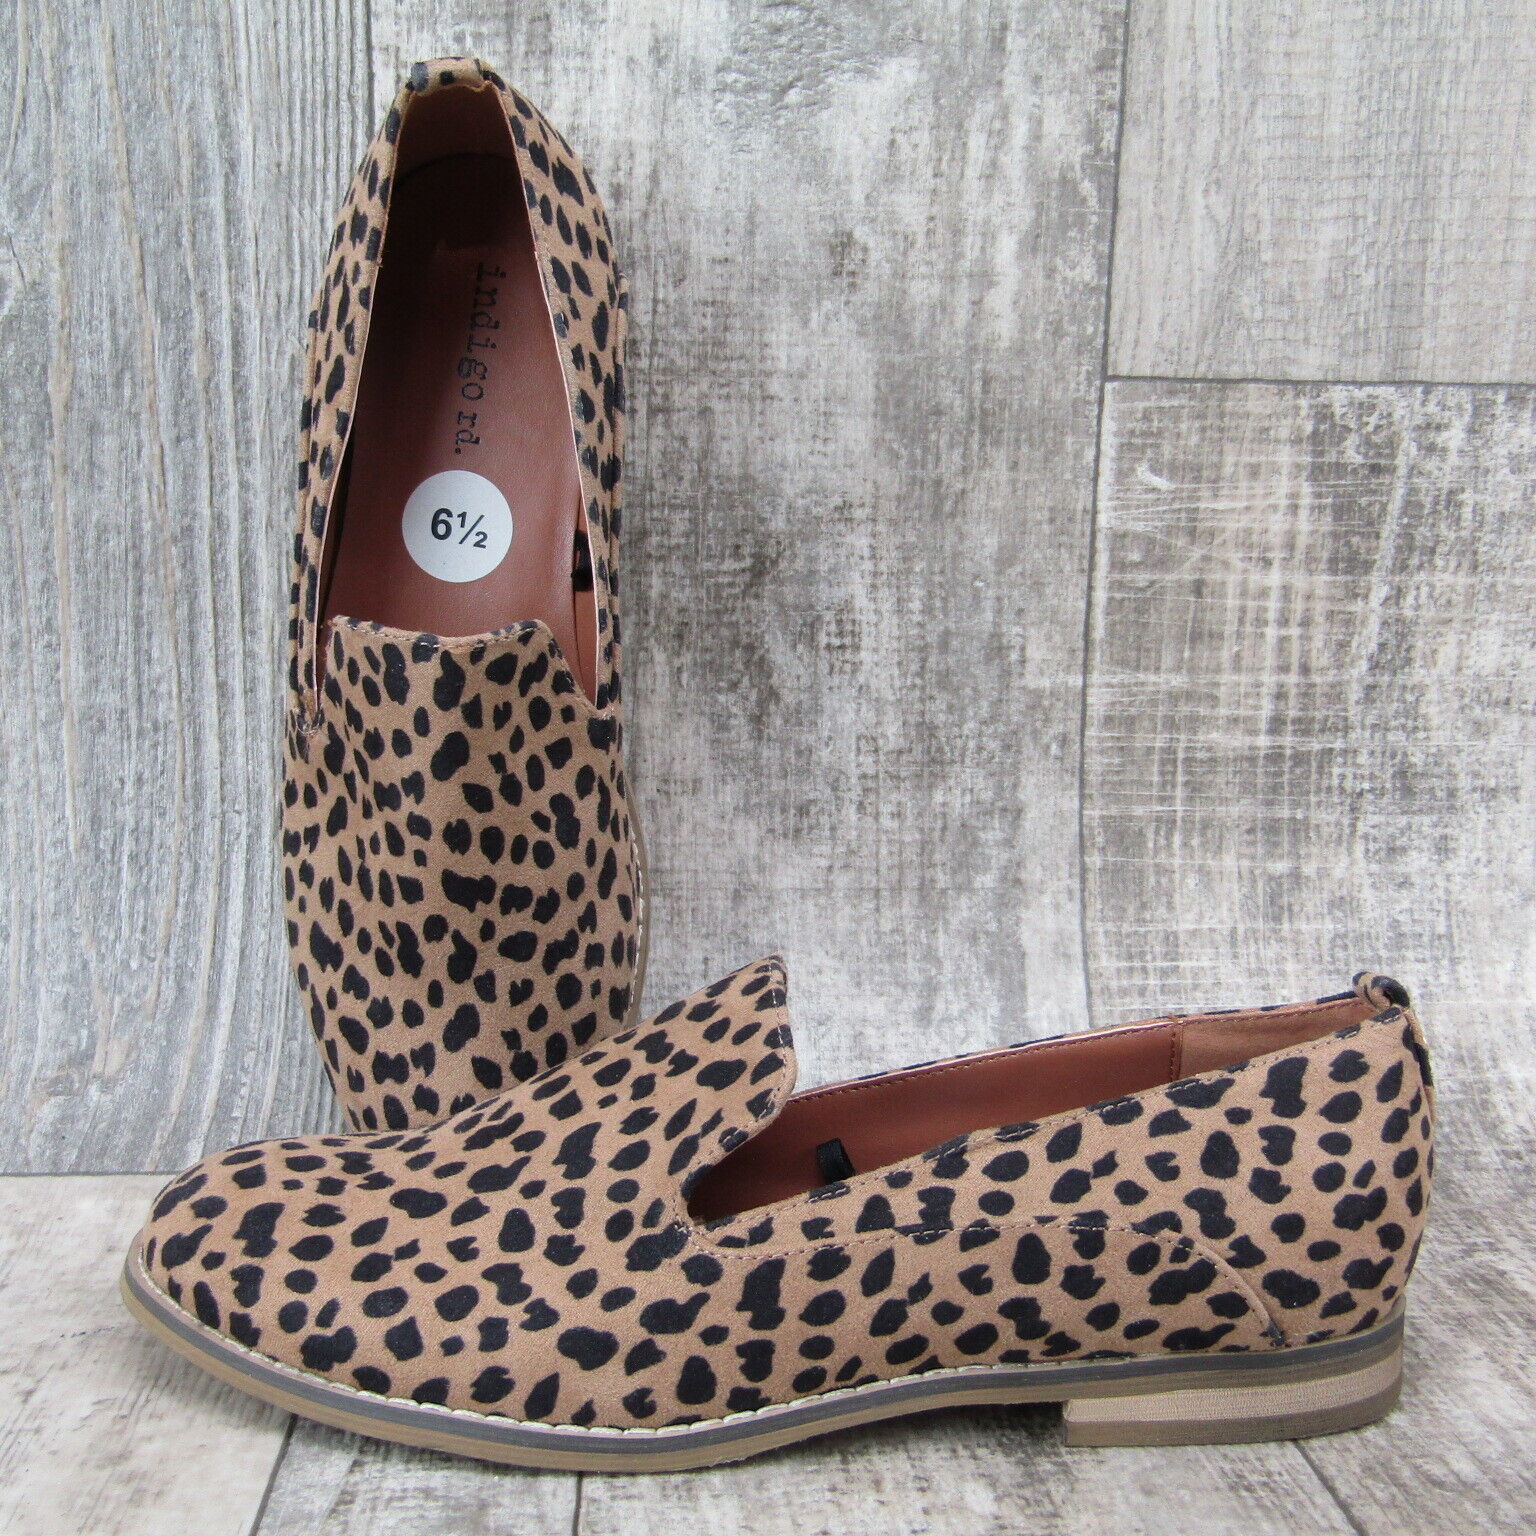 Indigo Rd. Women's Hestley Cheetah Leopard Loafers Size 6.5 Flats | eBay